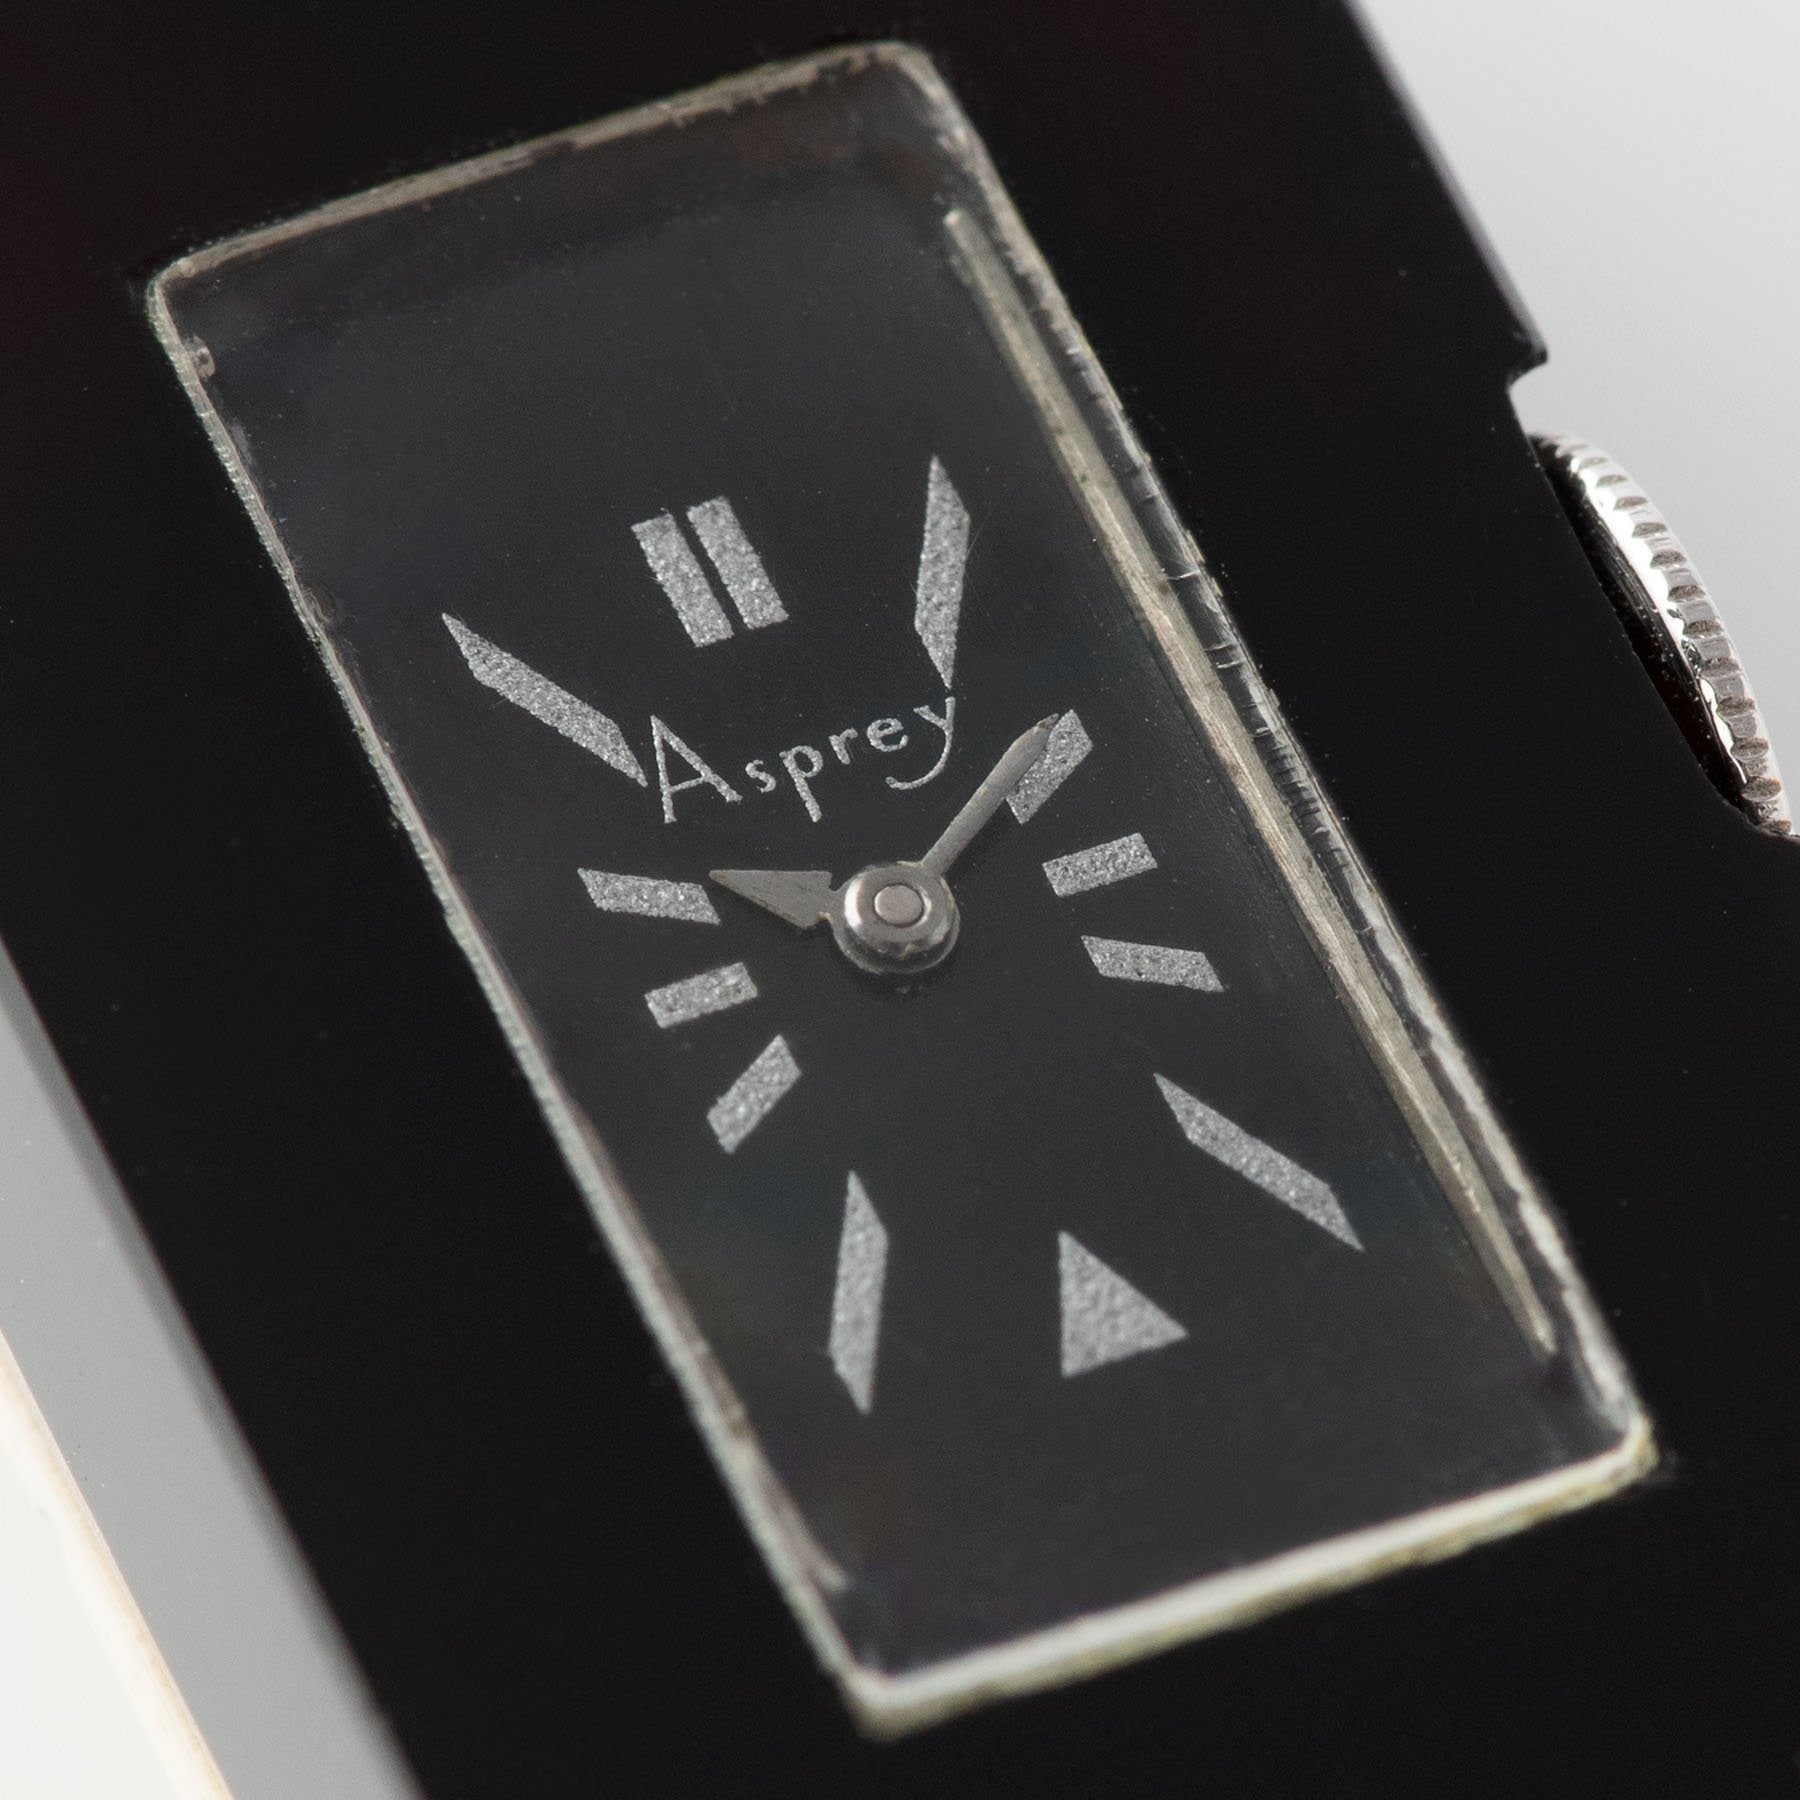 Domino Men's Chronograph Watch Brown Silver Case Leather Band DM-8033WBG  price in UAE | Amazon UAE | kanbkam